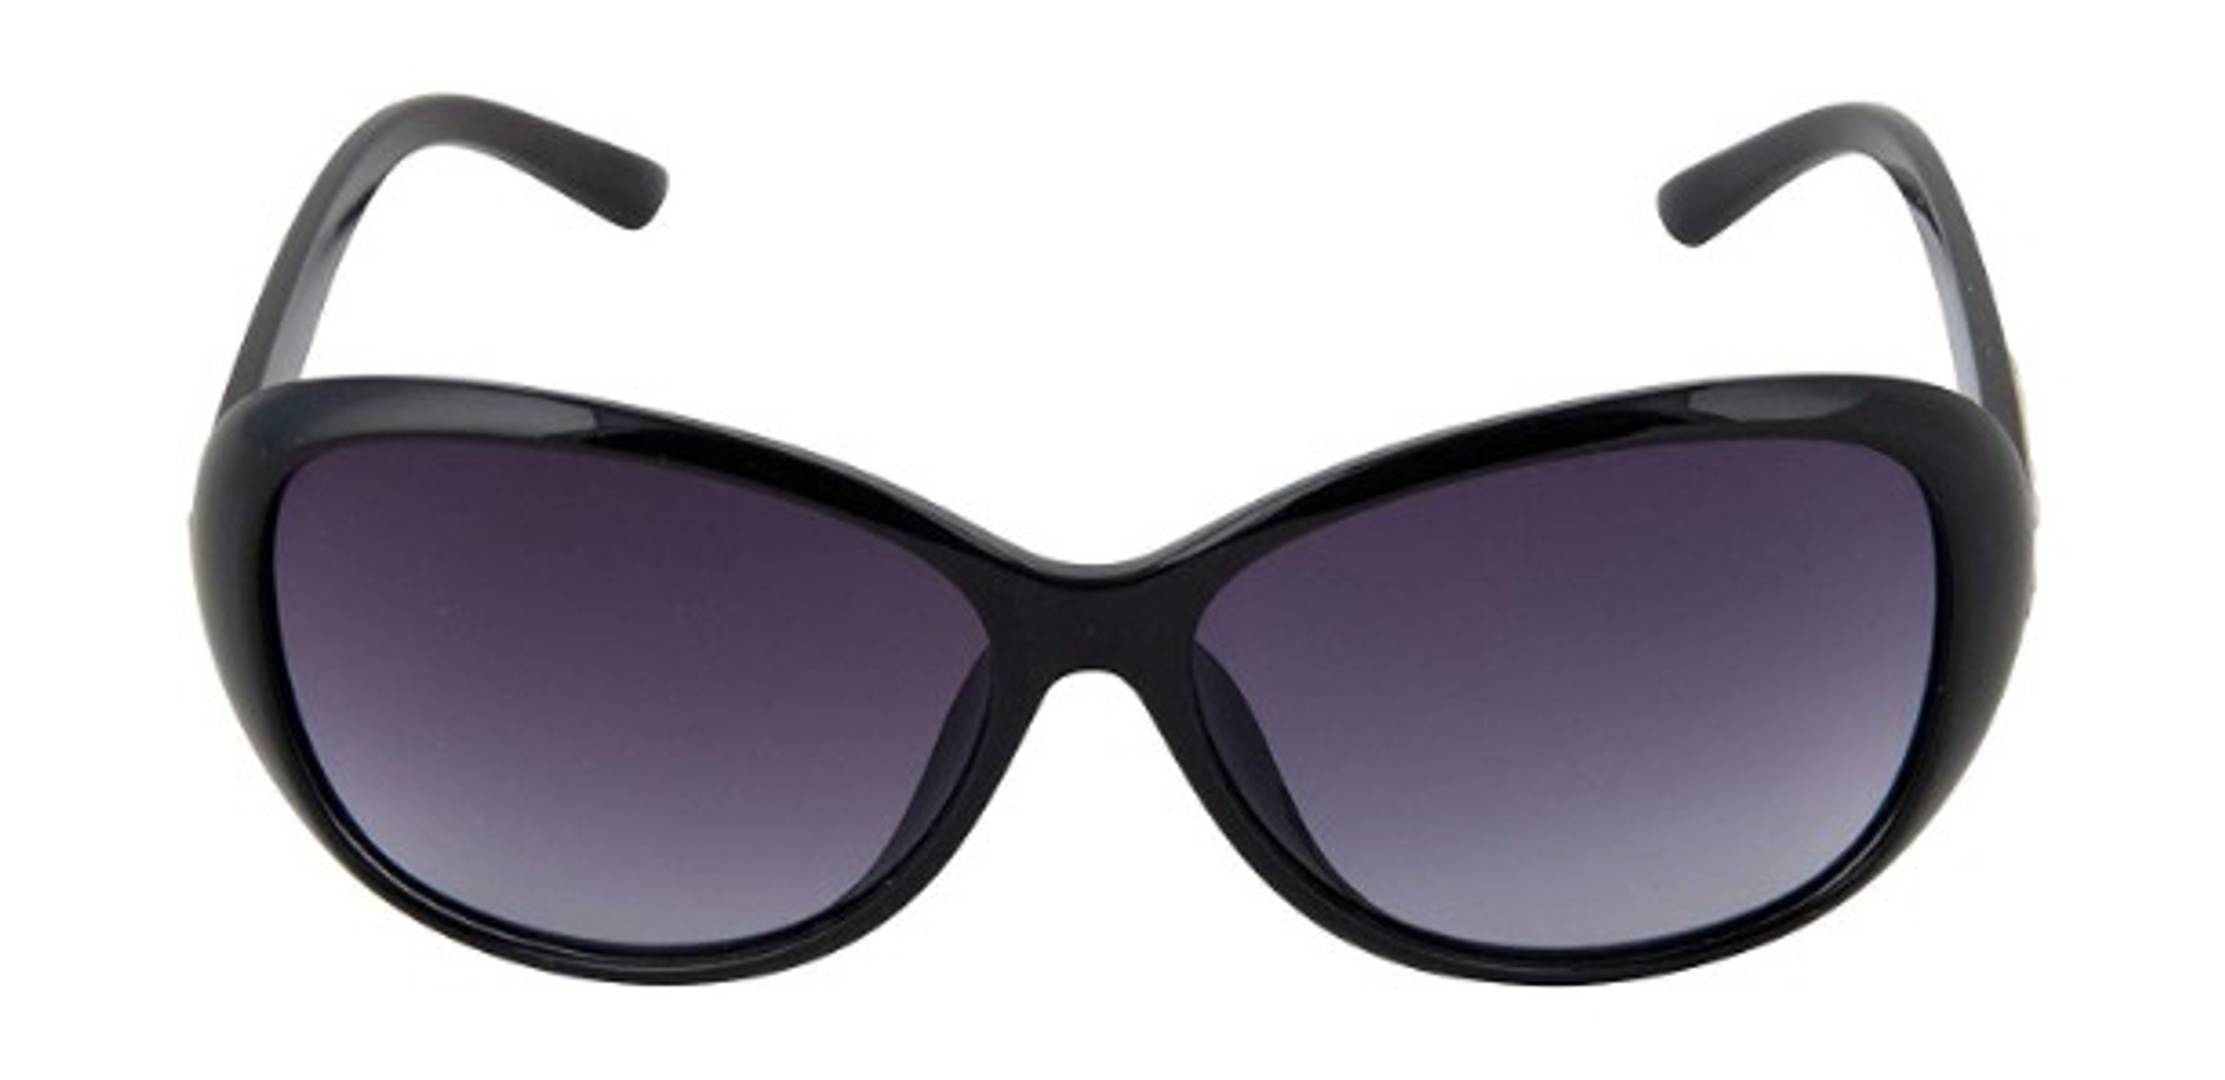 Royal Sunglasses For Girls Buy 2 Get 1 Free